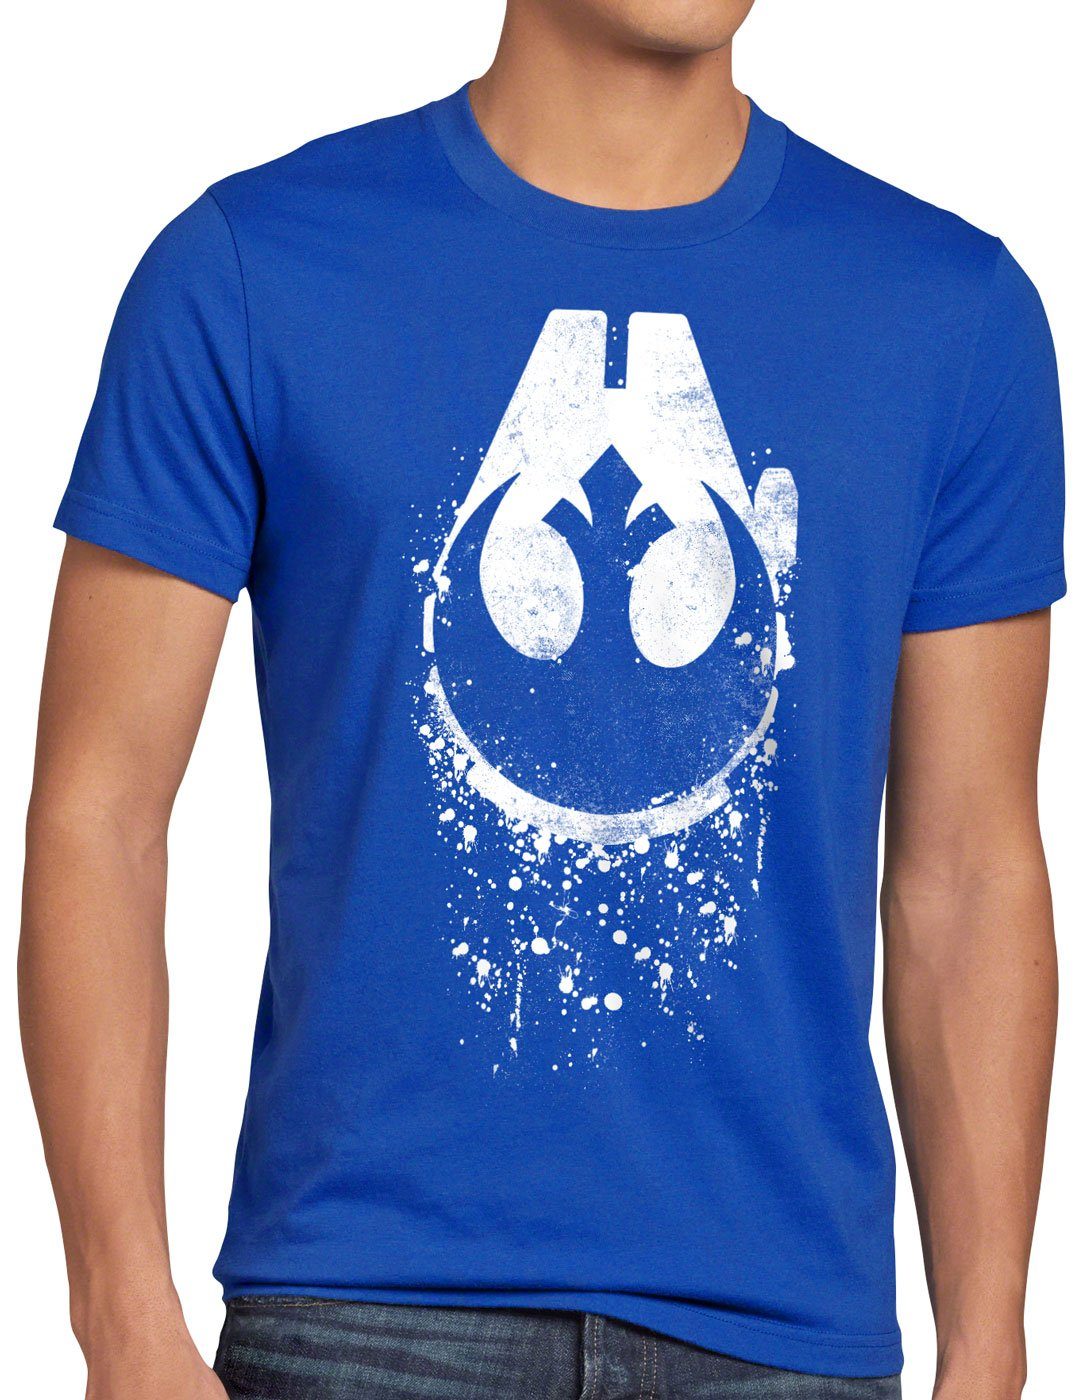 style3 Print-Shirt Herren T-Shirt Rebel Star xwing ywing yavin blau